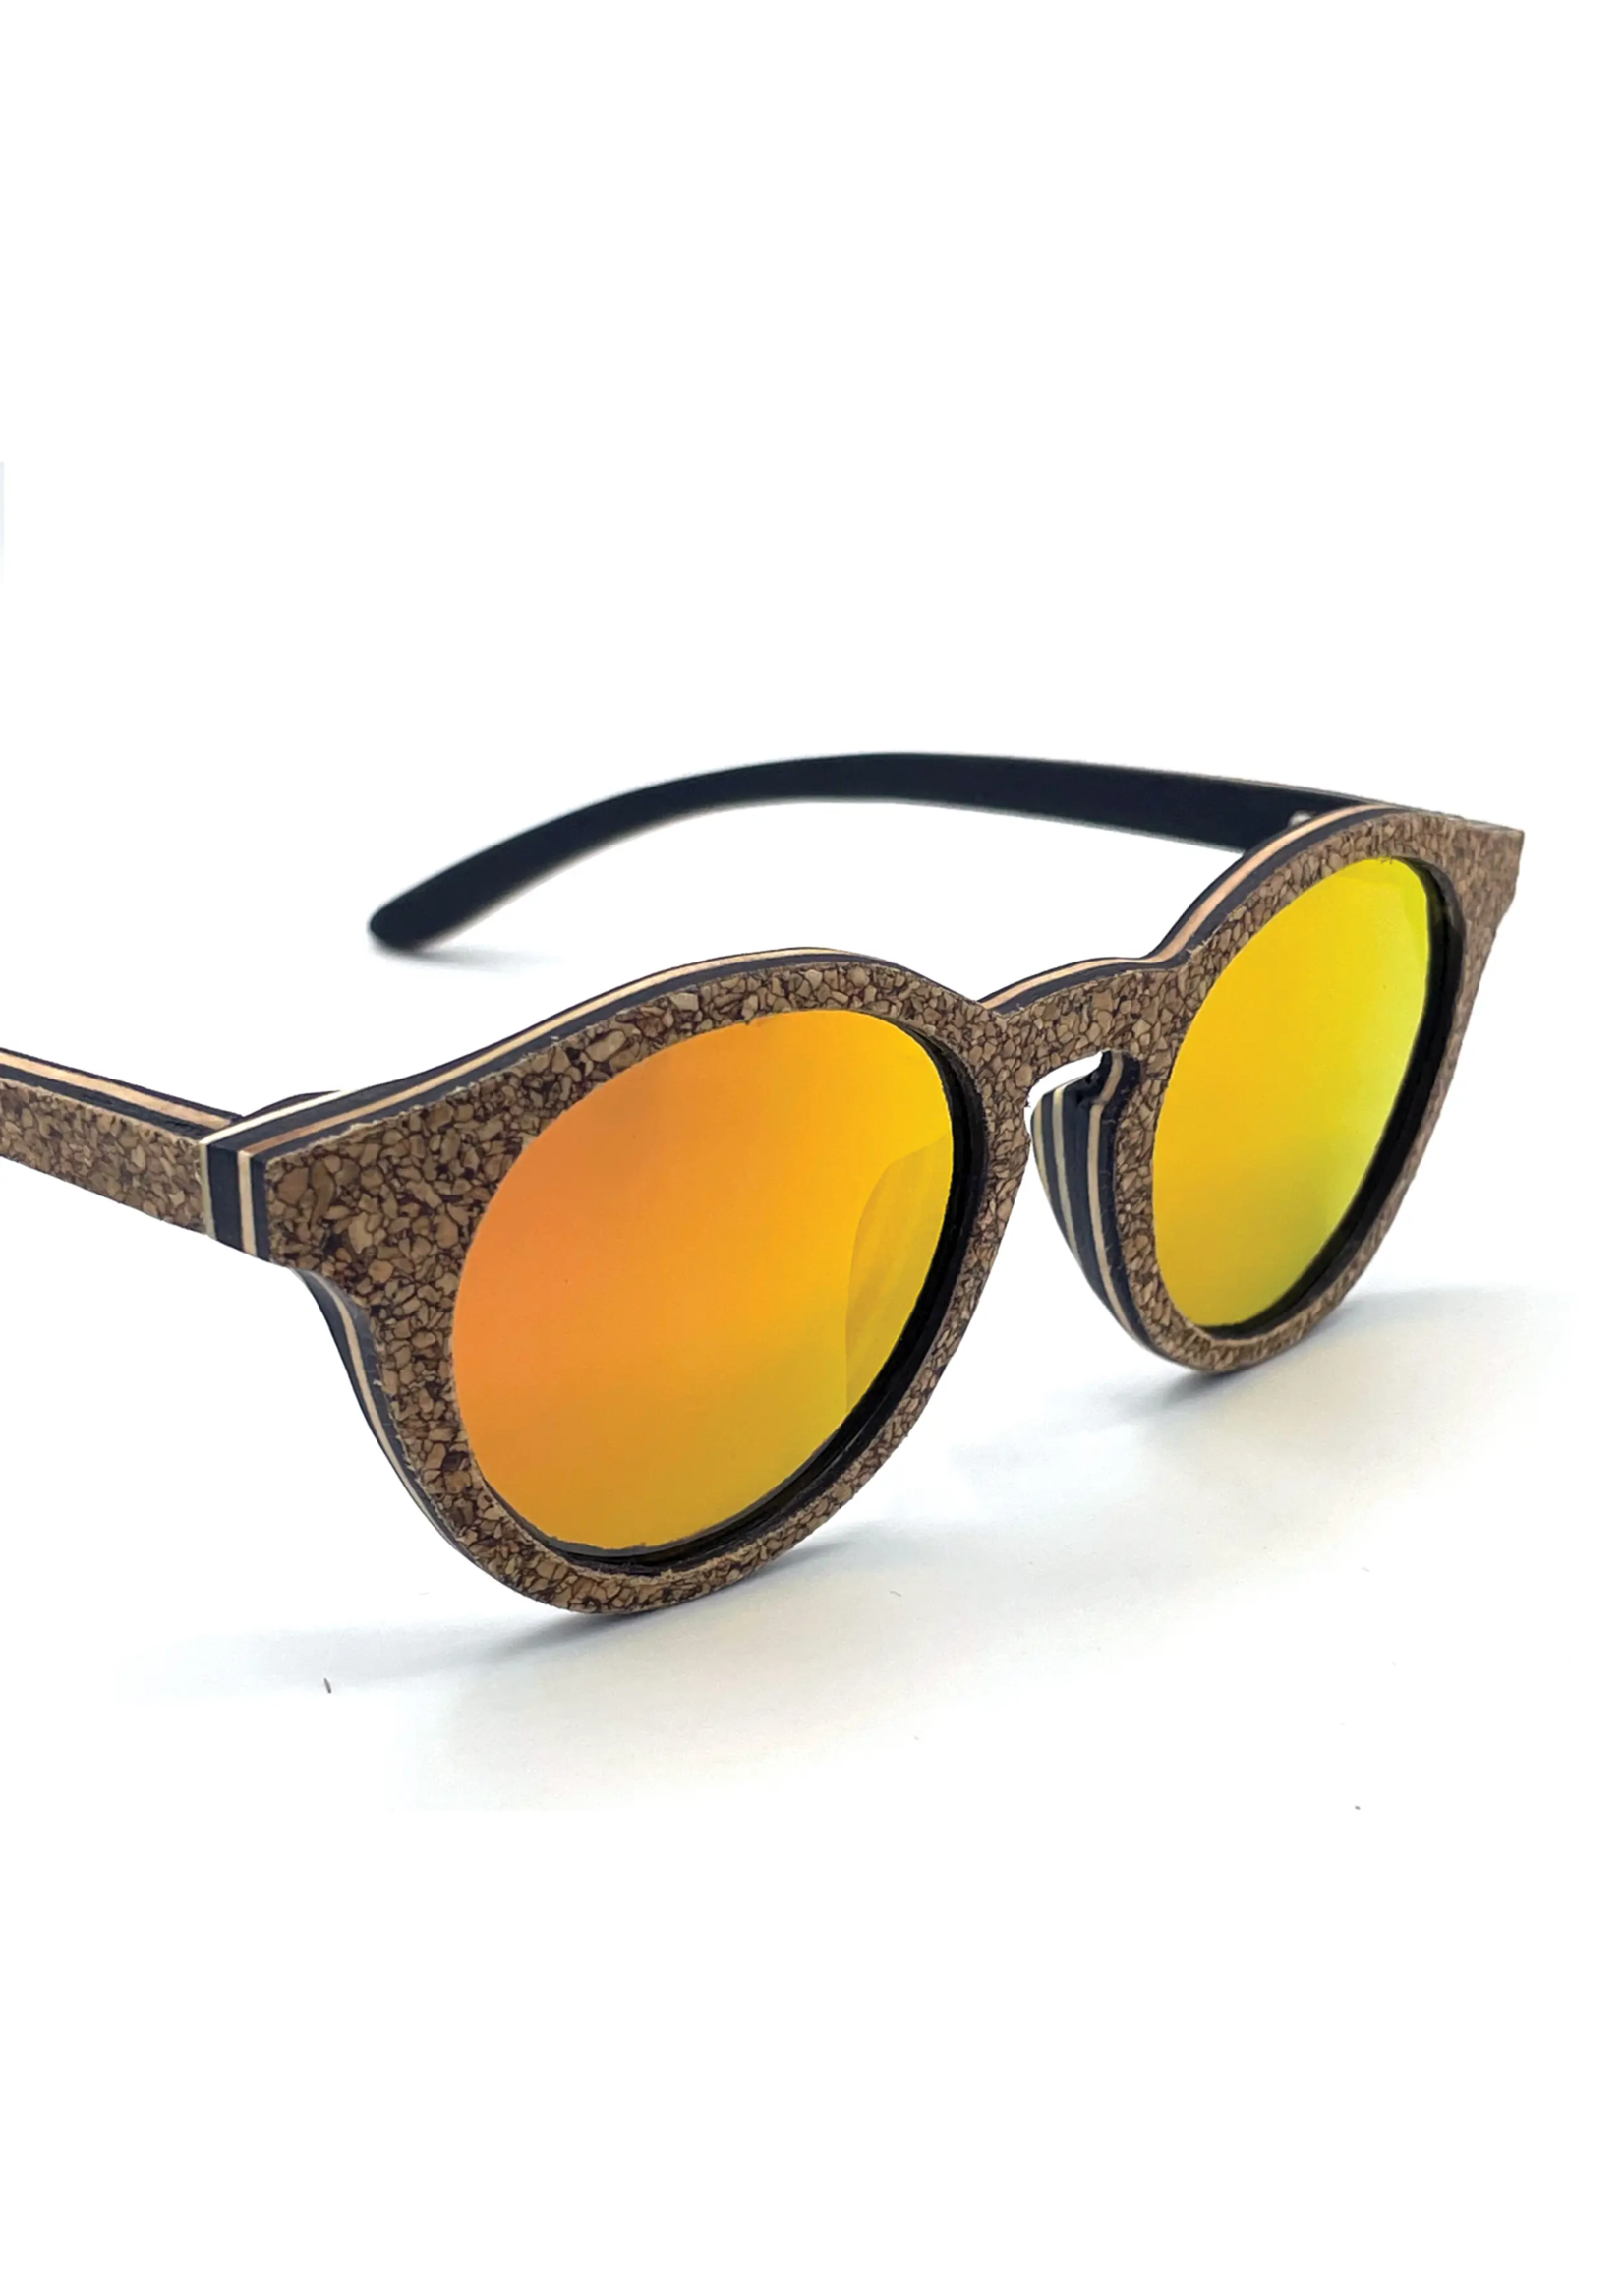 Bobo Wooden Sunglasses Polarized Bird